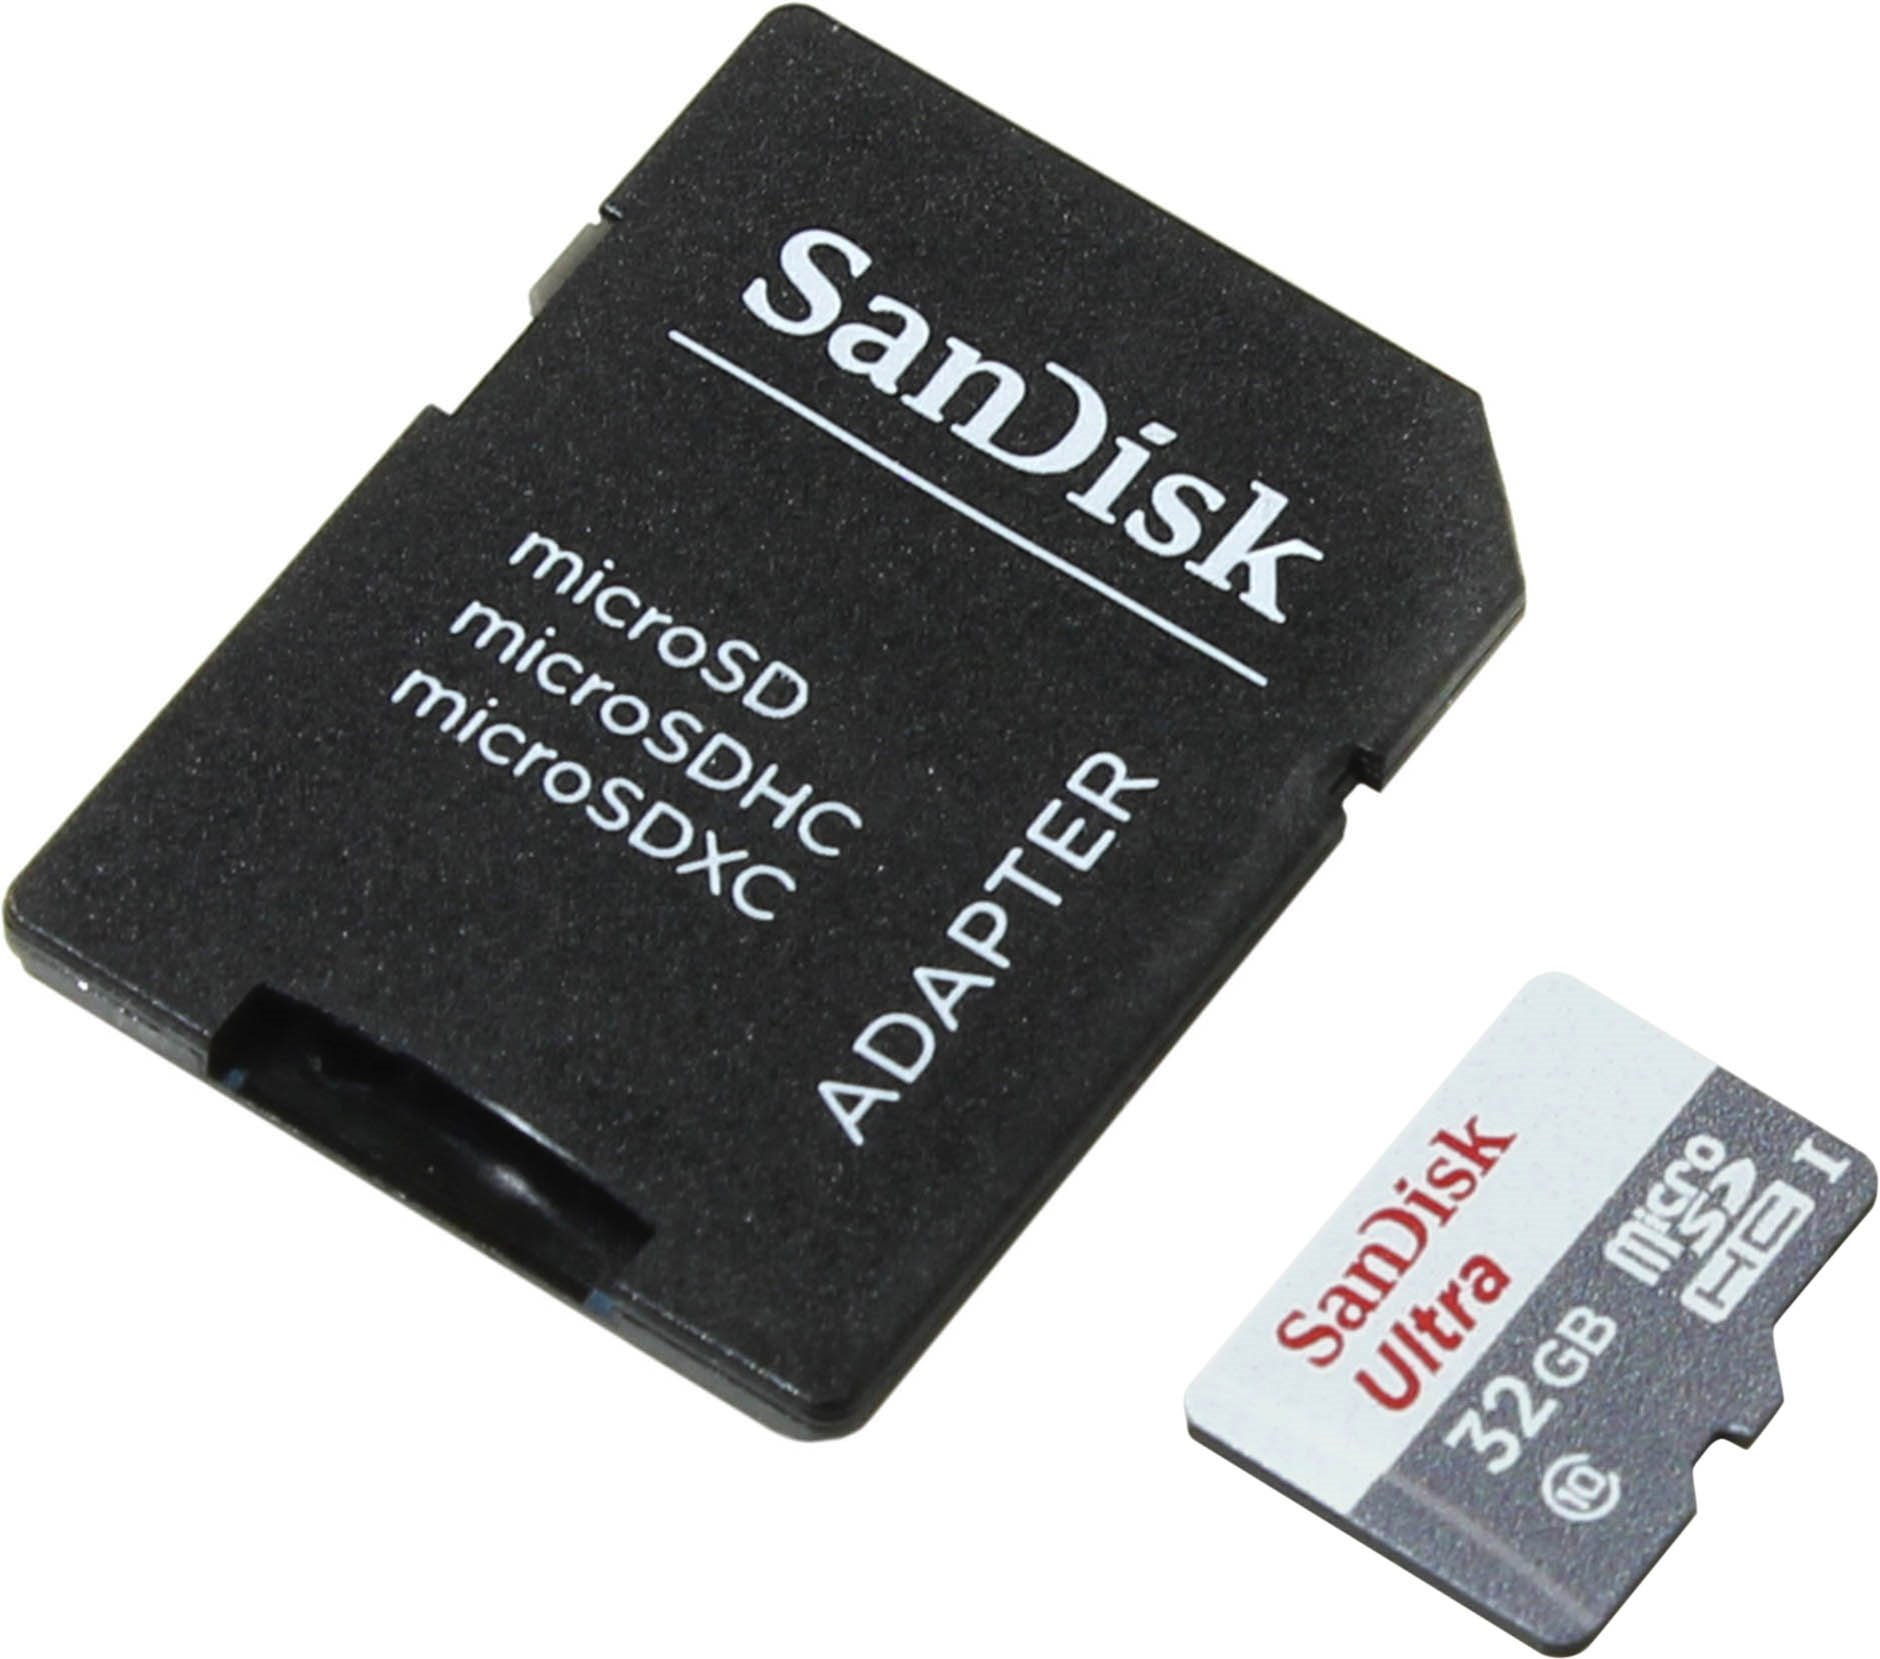 CH032SDK71 – SANDISK MEMORY CARD MICROSD-2